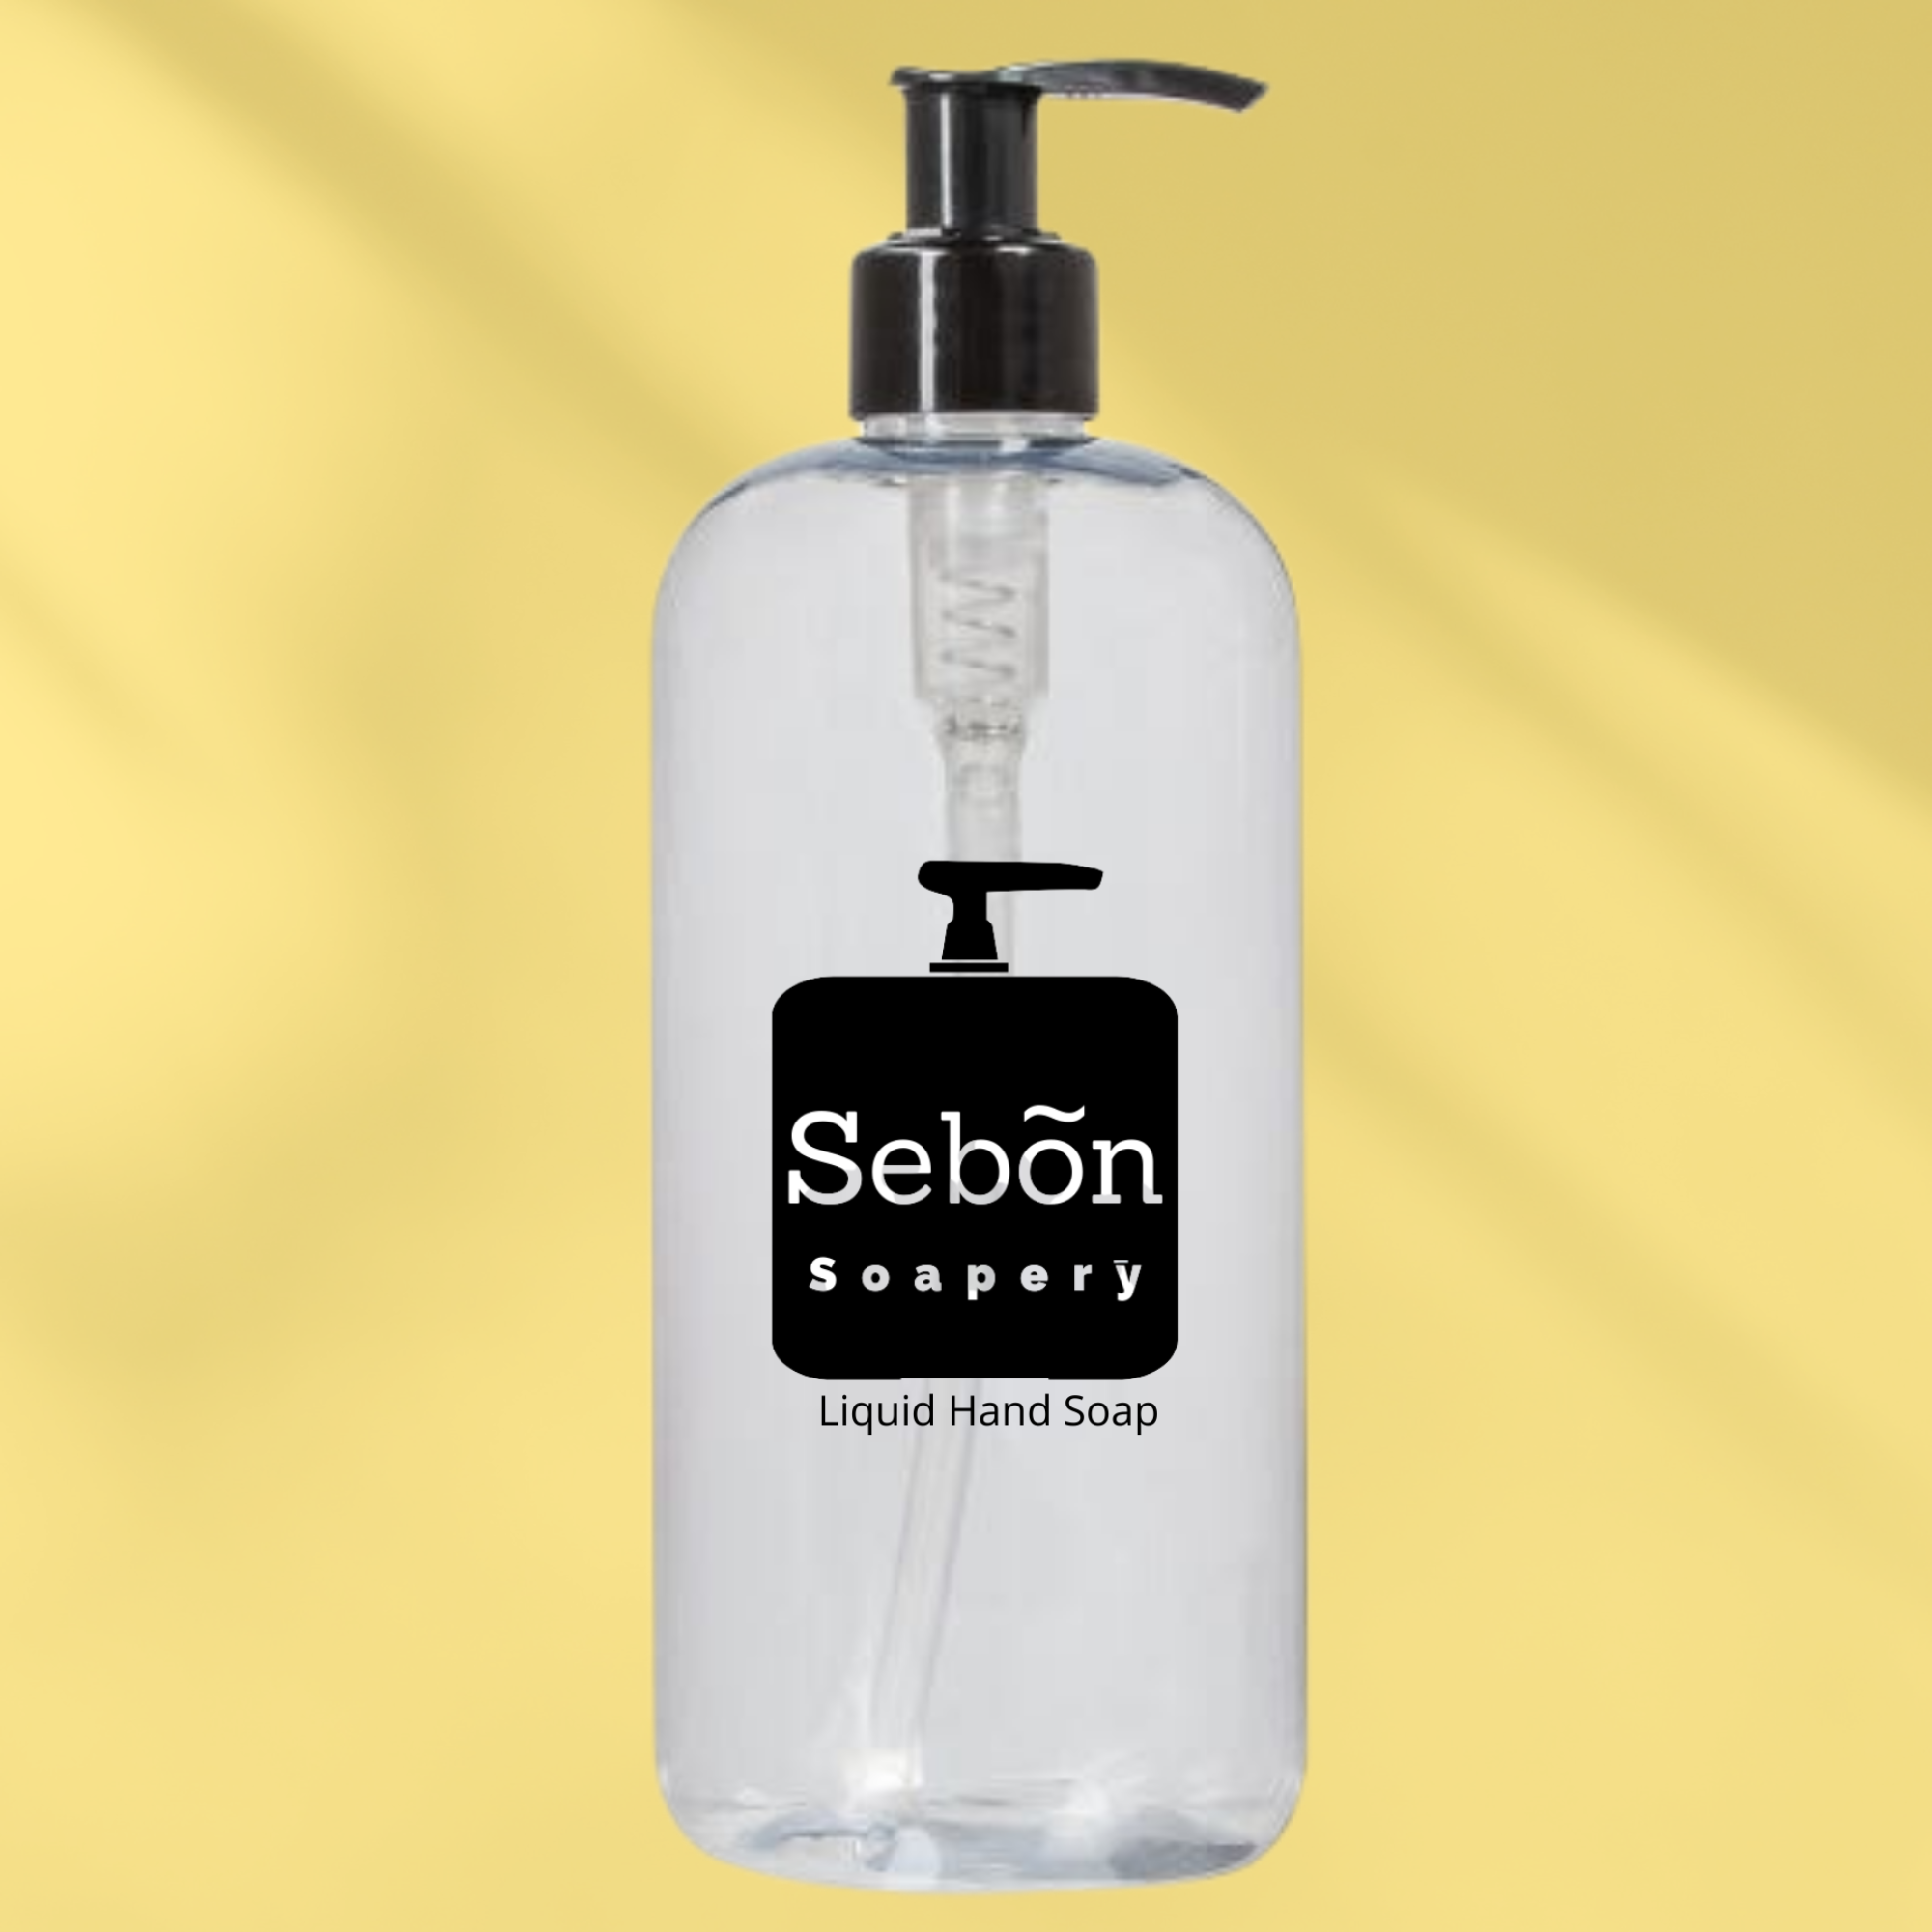 Sebon Autumn Equinox Scented Liquid Hand Soap with Olive Oil